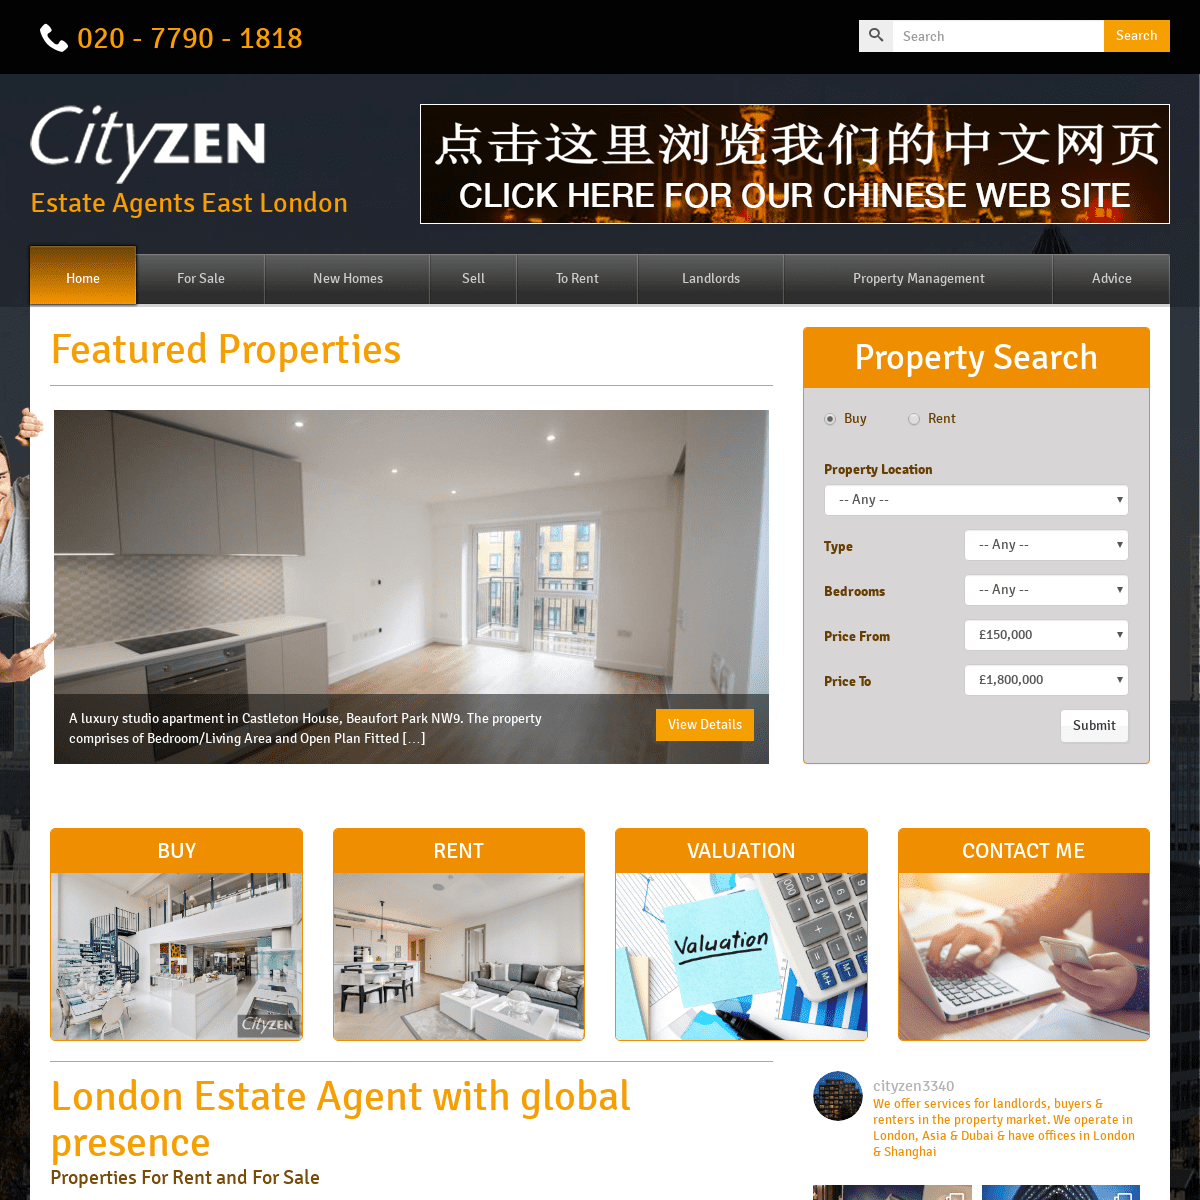 London Estate Agent with global presence - CityZEN Estate Agents